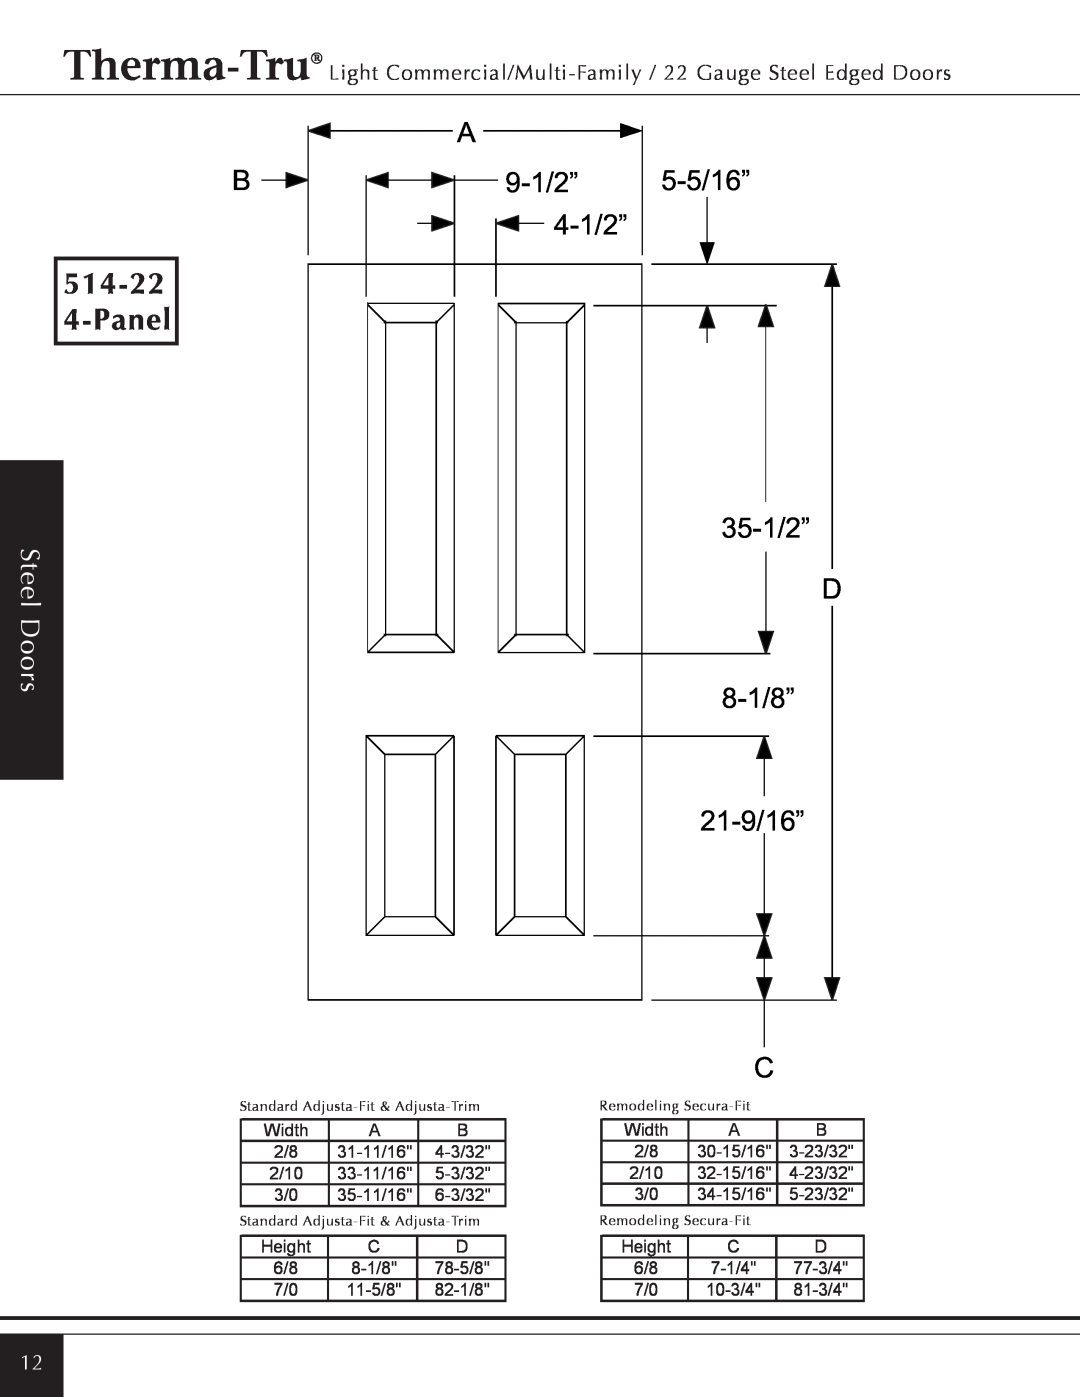 Therma-Tru Light Commercial/Multi-Family / 22 & 24 Gauge Steel Edged Door manual 514-22 4-Panel, 9-1/2”, 5-5/16”, 4-1/2” 